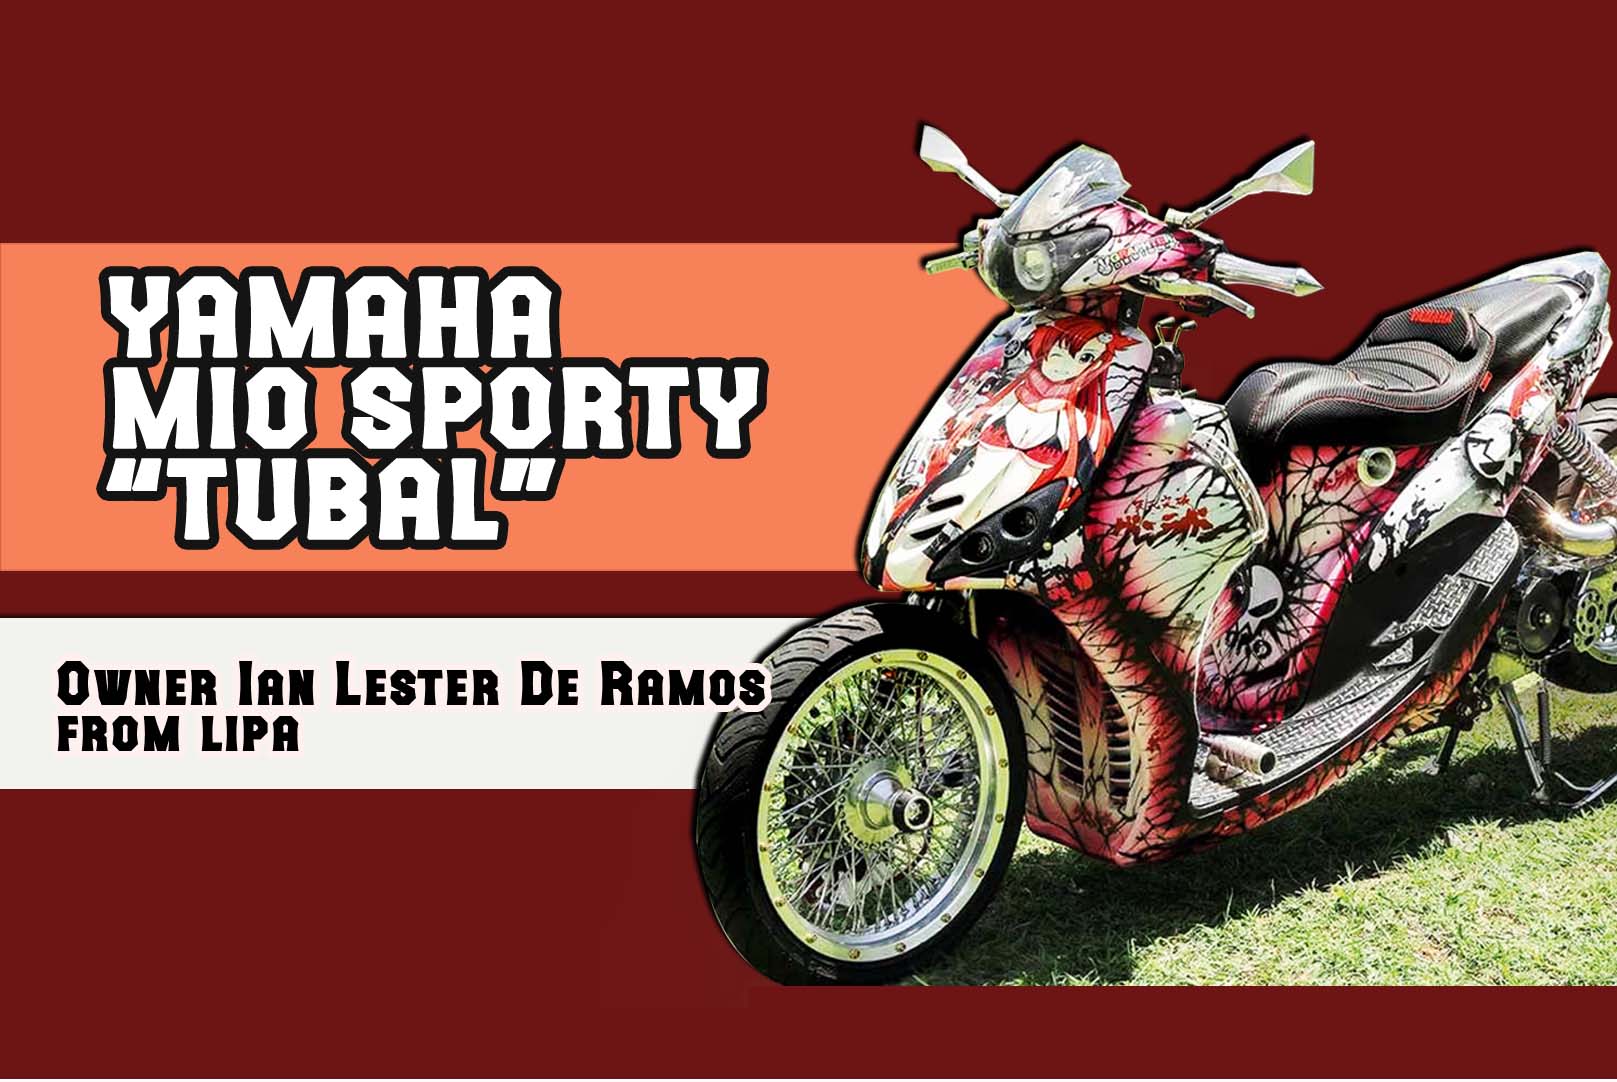  Tubal Yamaha  Mio  Sporty from Lipa InsideRACING